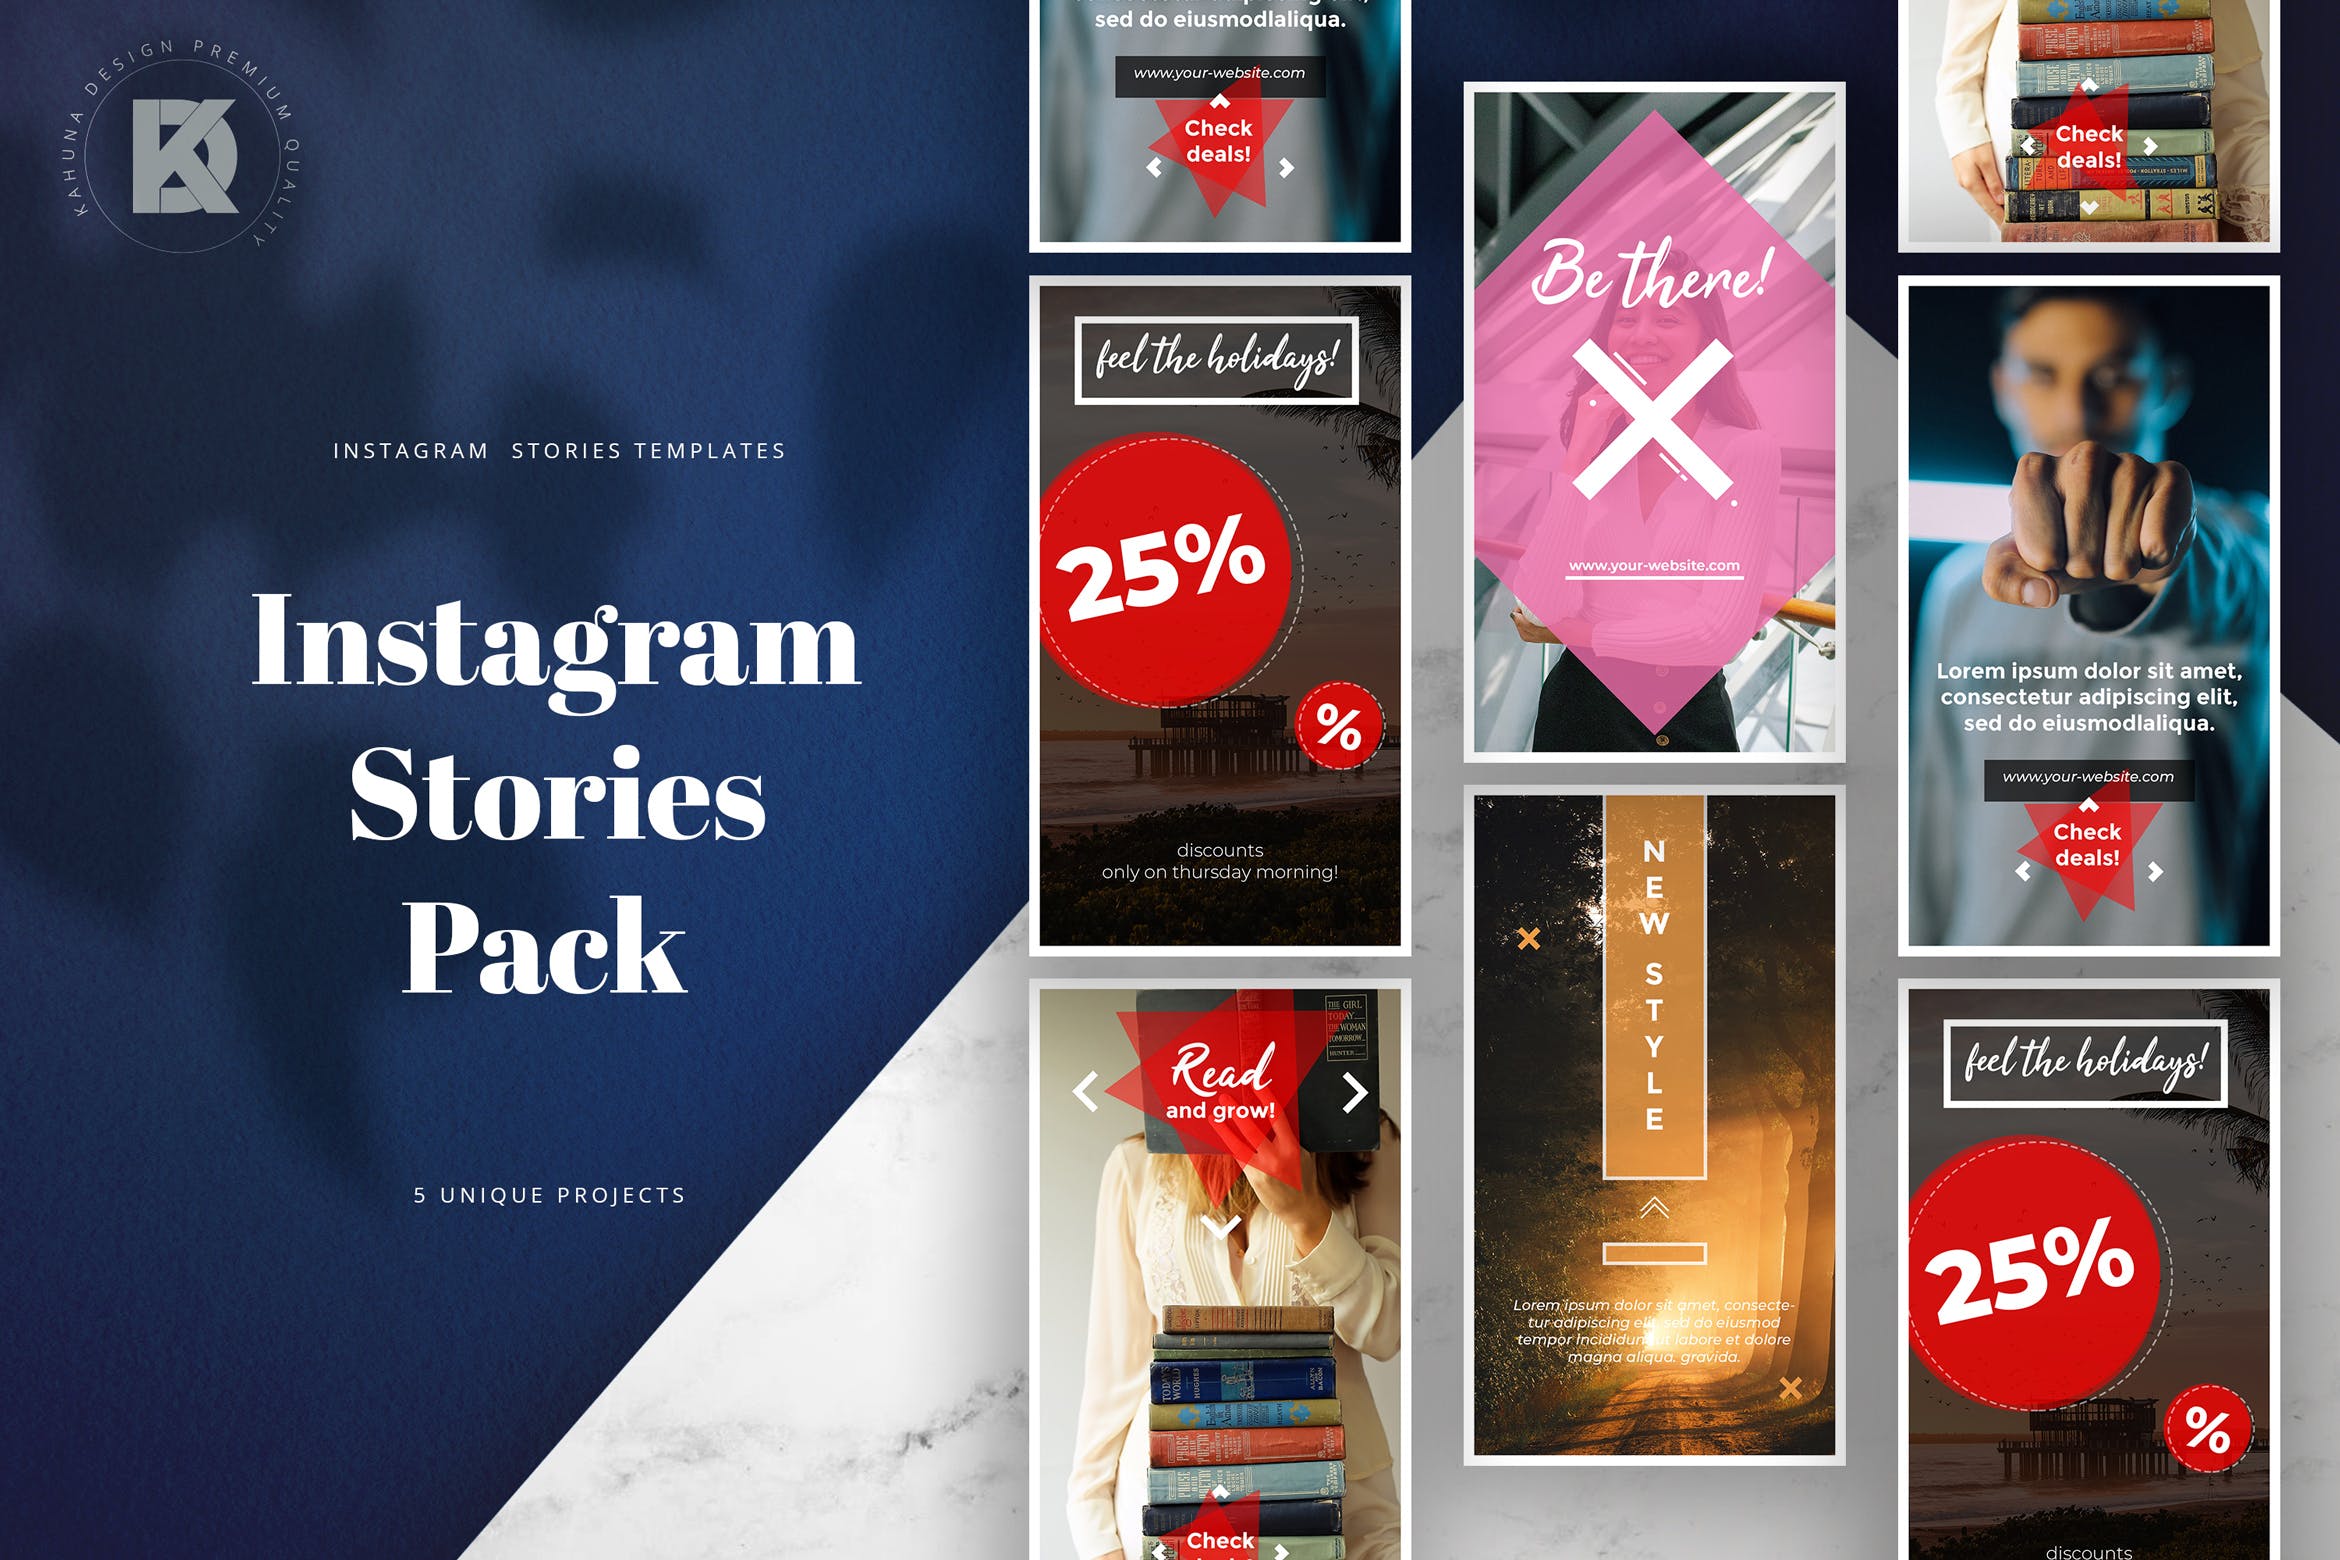 Instagram社交品牌促销广告设计模板素材库精选 Instagram Stories Pack插图